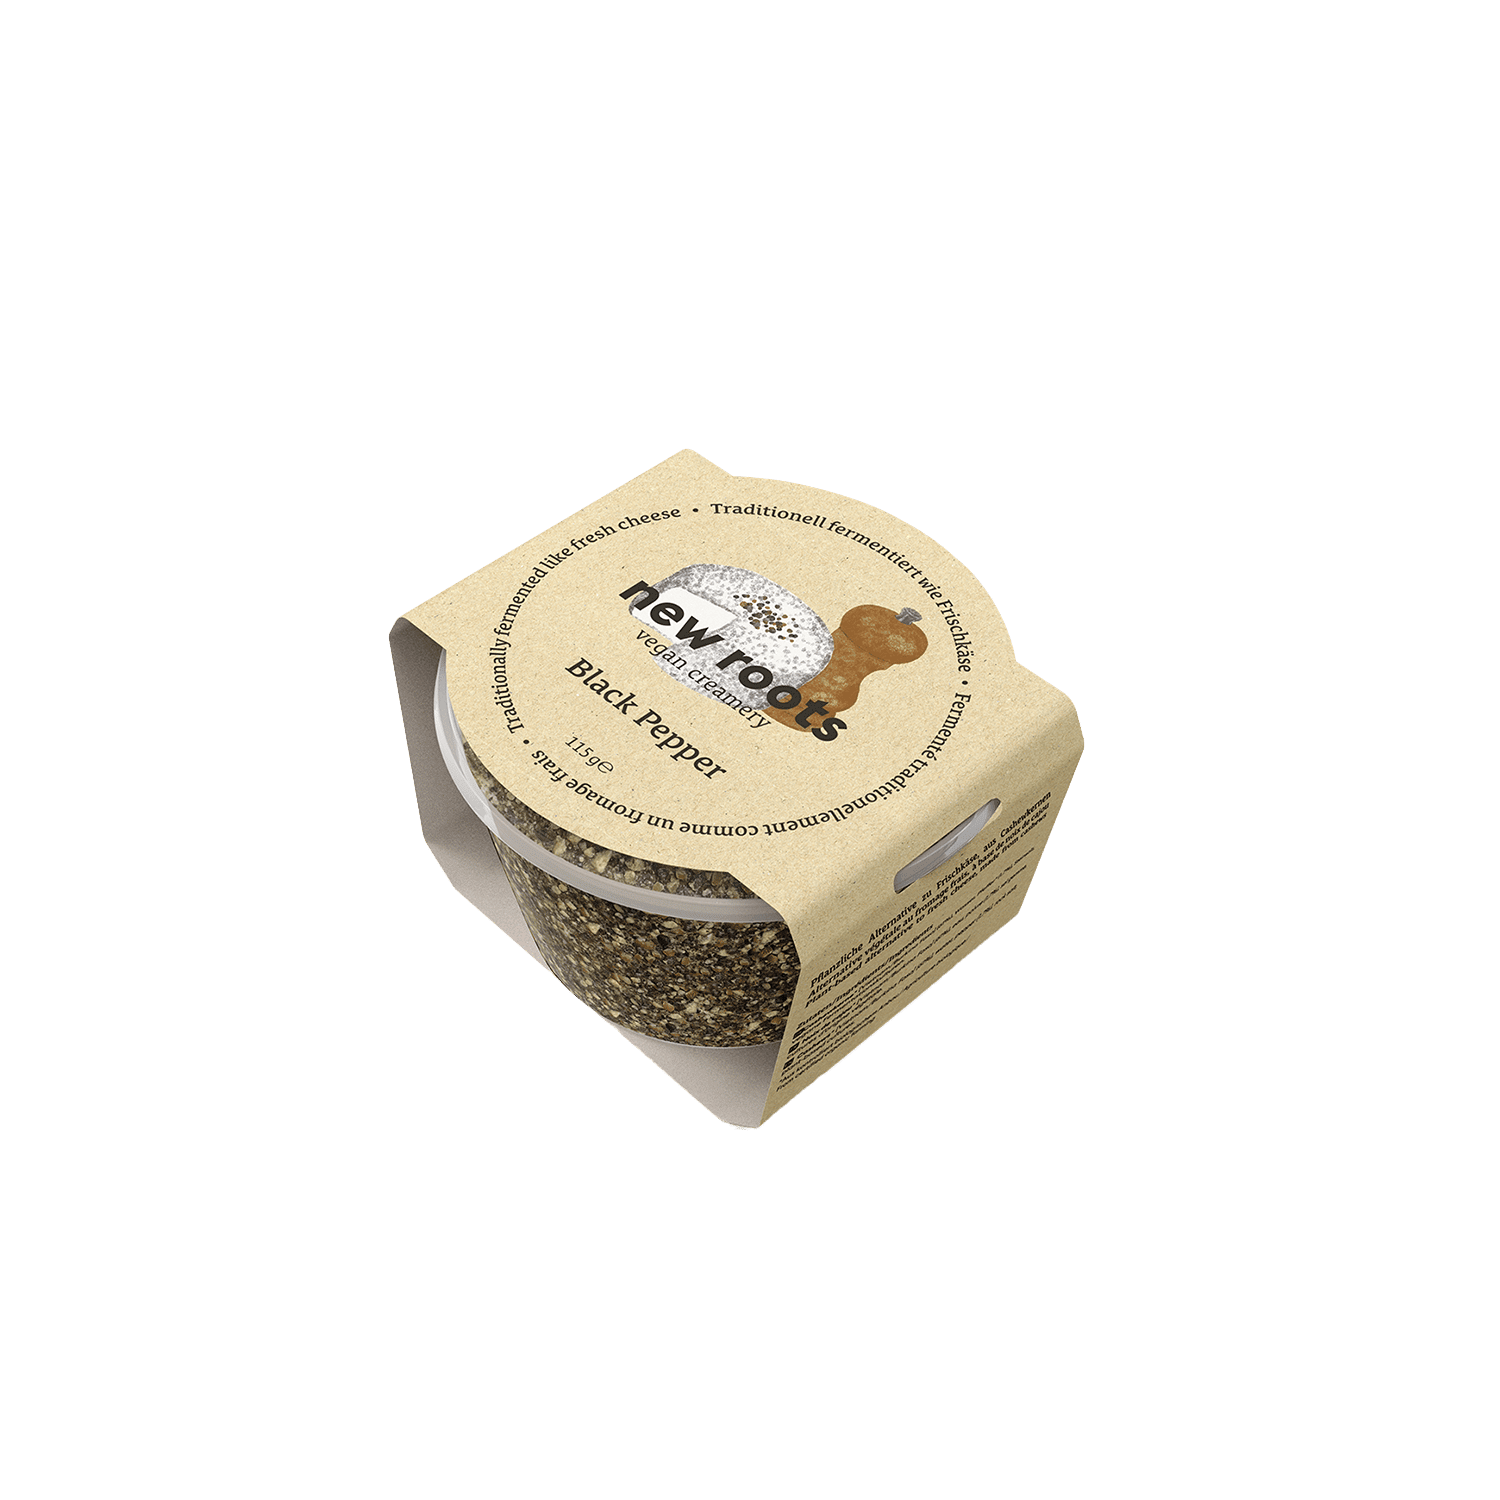 Vegan Creamery Black Pepper Alternative To Cream Cheese, Organic, 115g